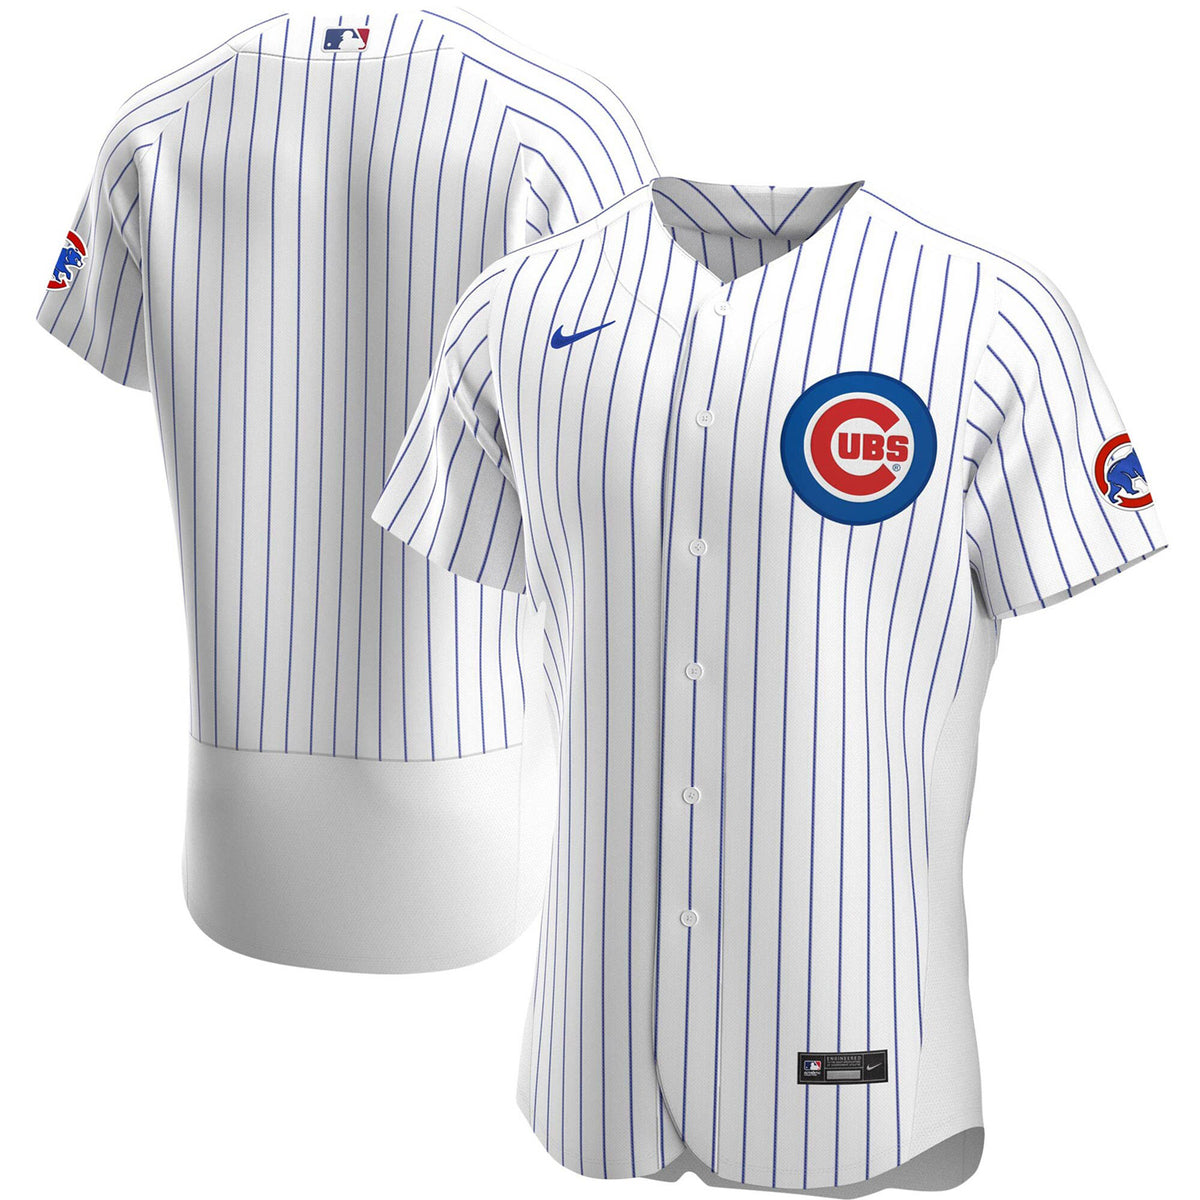 2020 Nike Rebrand - Chicago Cubs Uniform Set